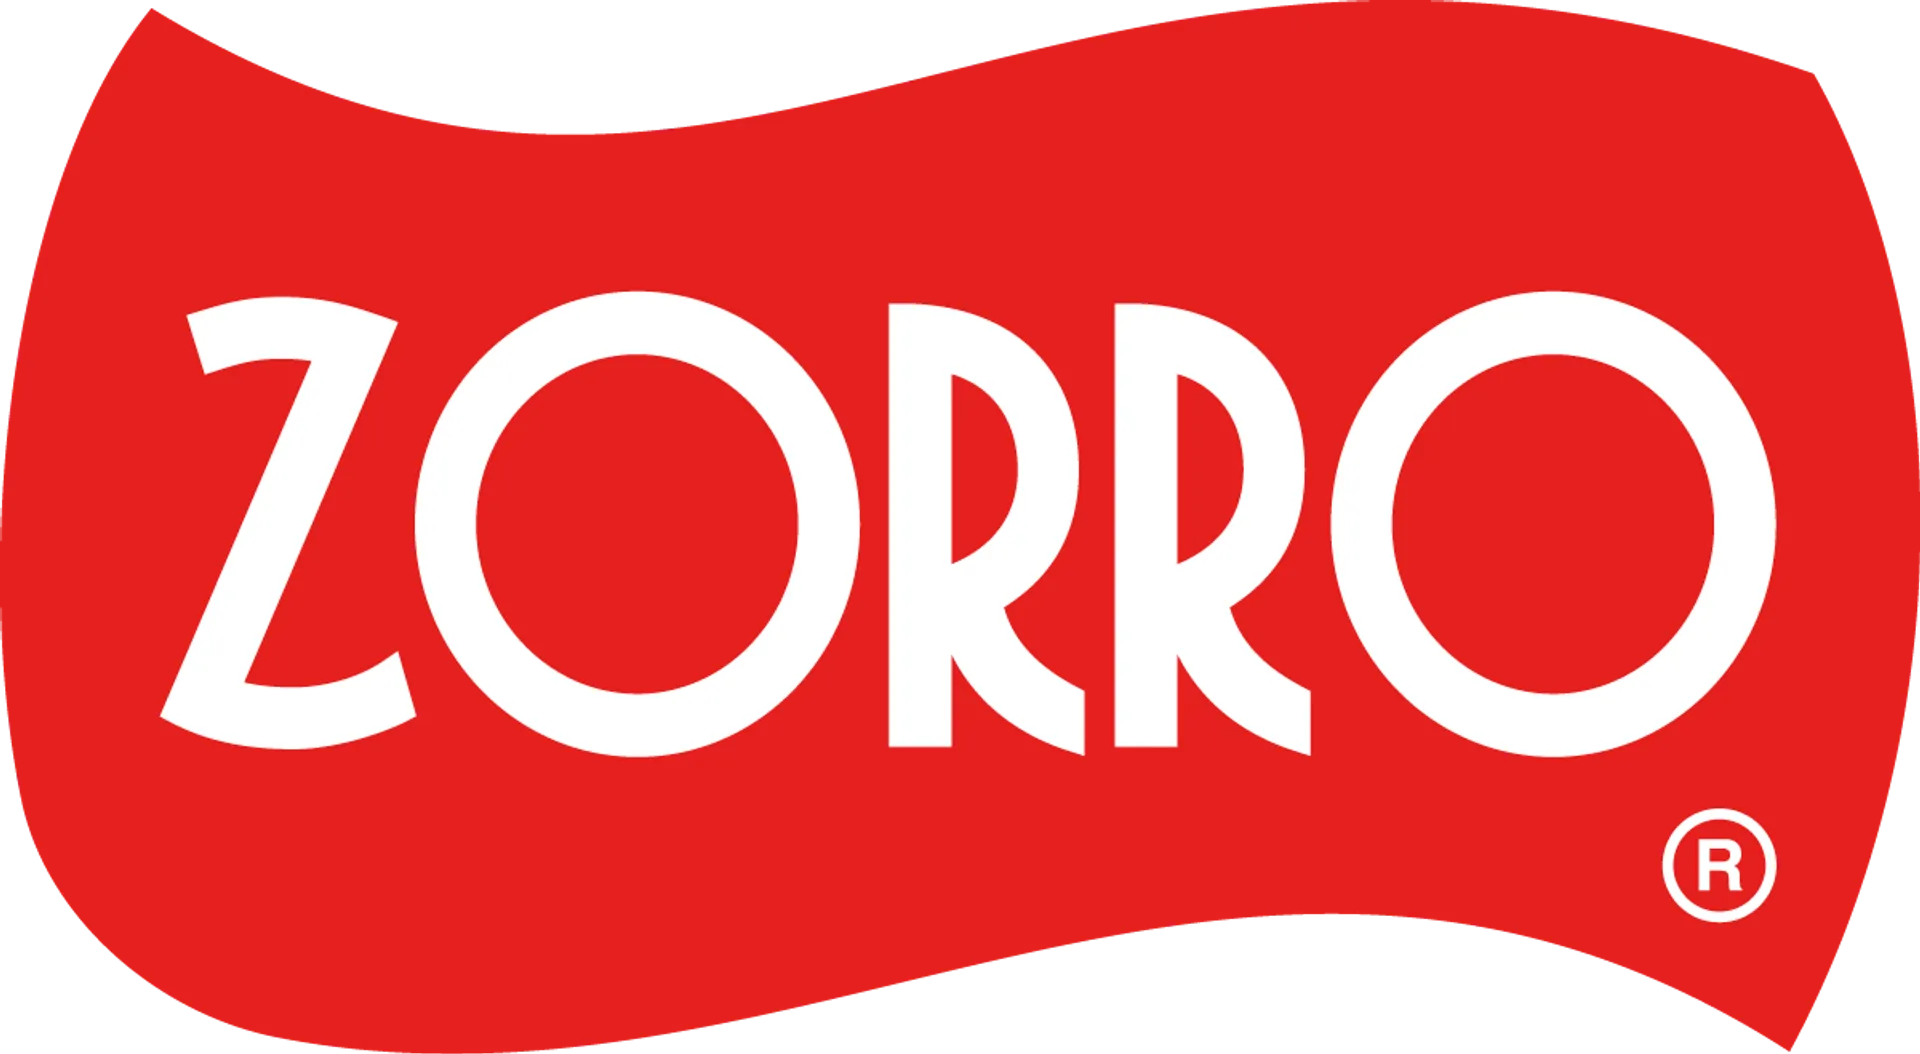 ZORRO logo